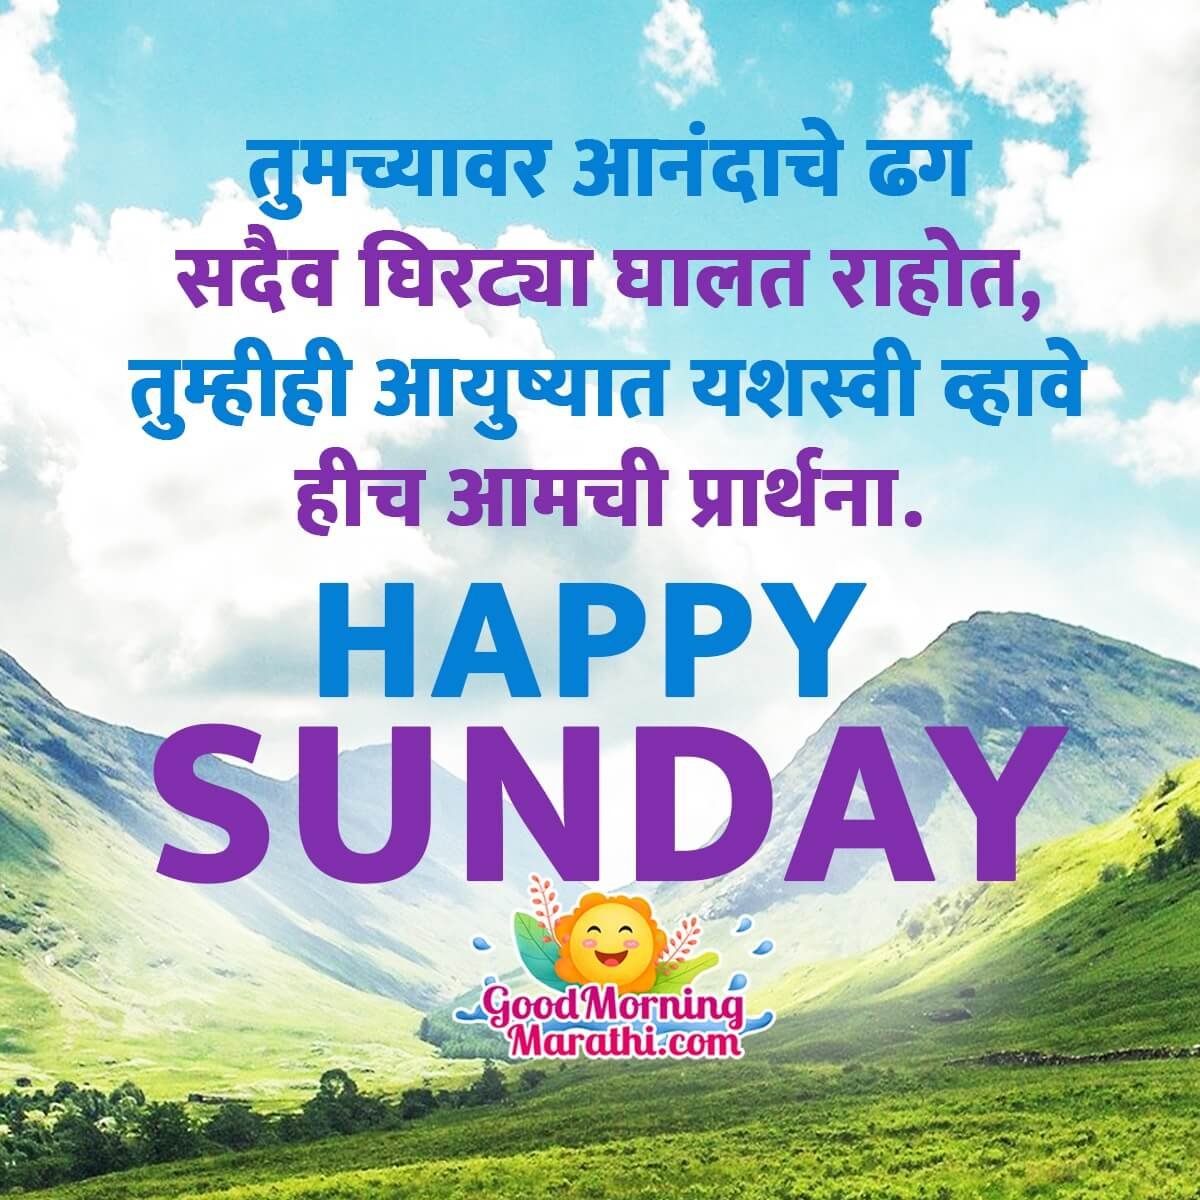 Good Morning Sunday Messages In Marathi